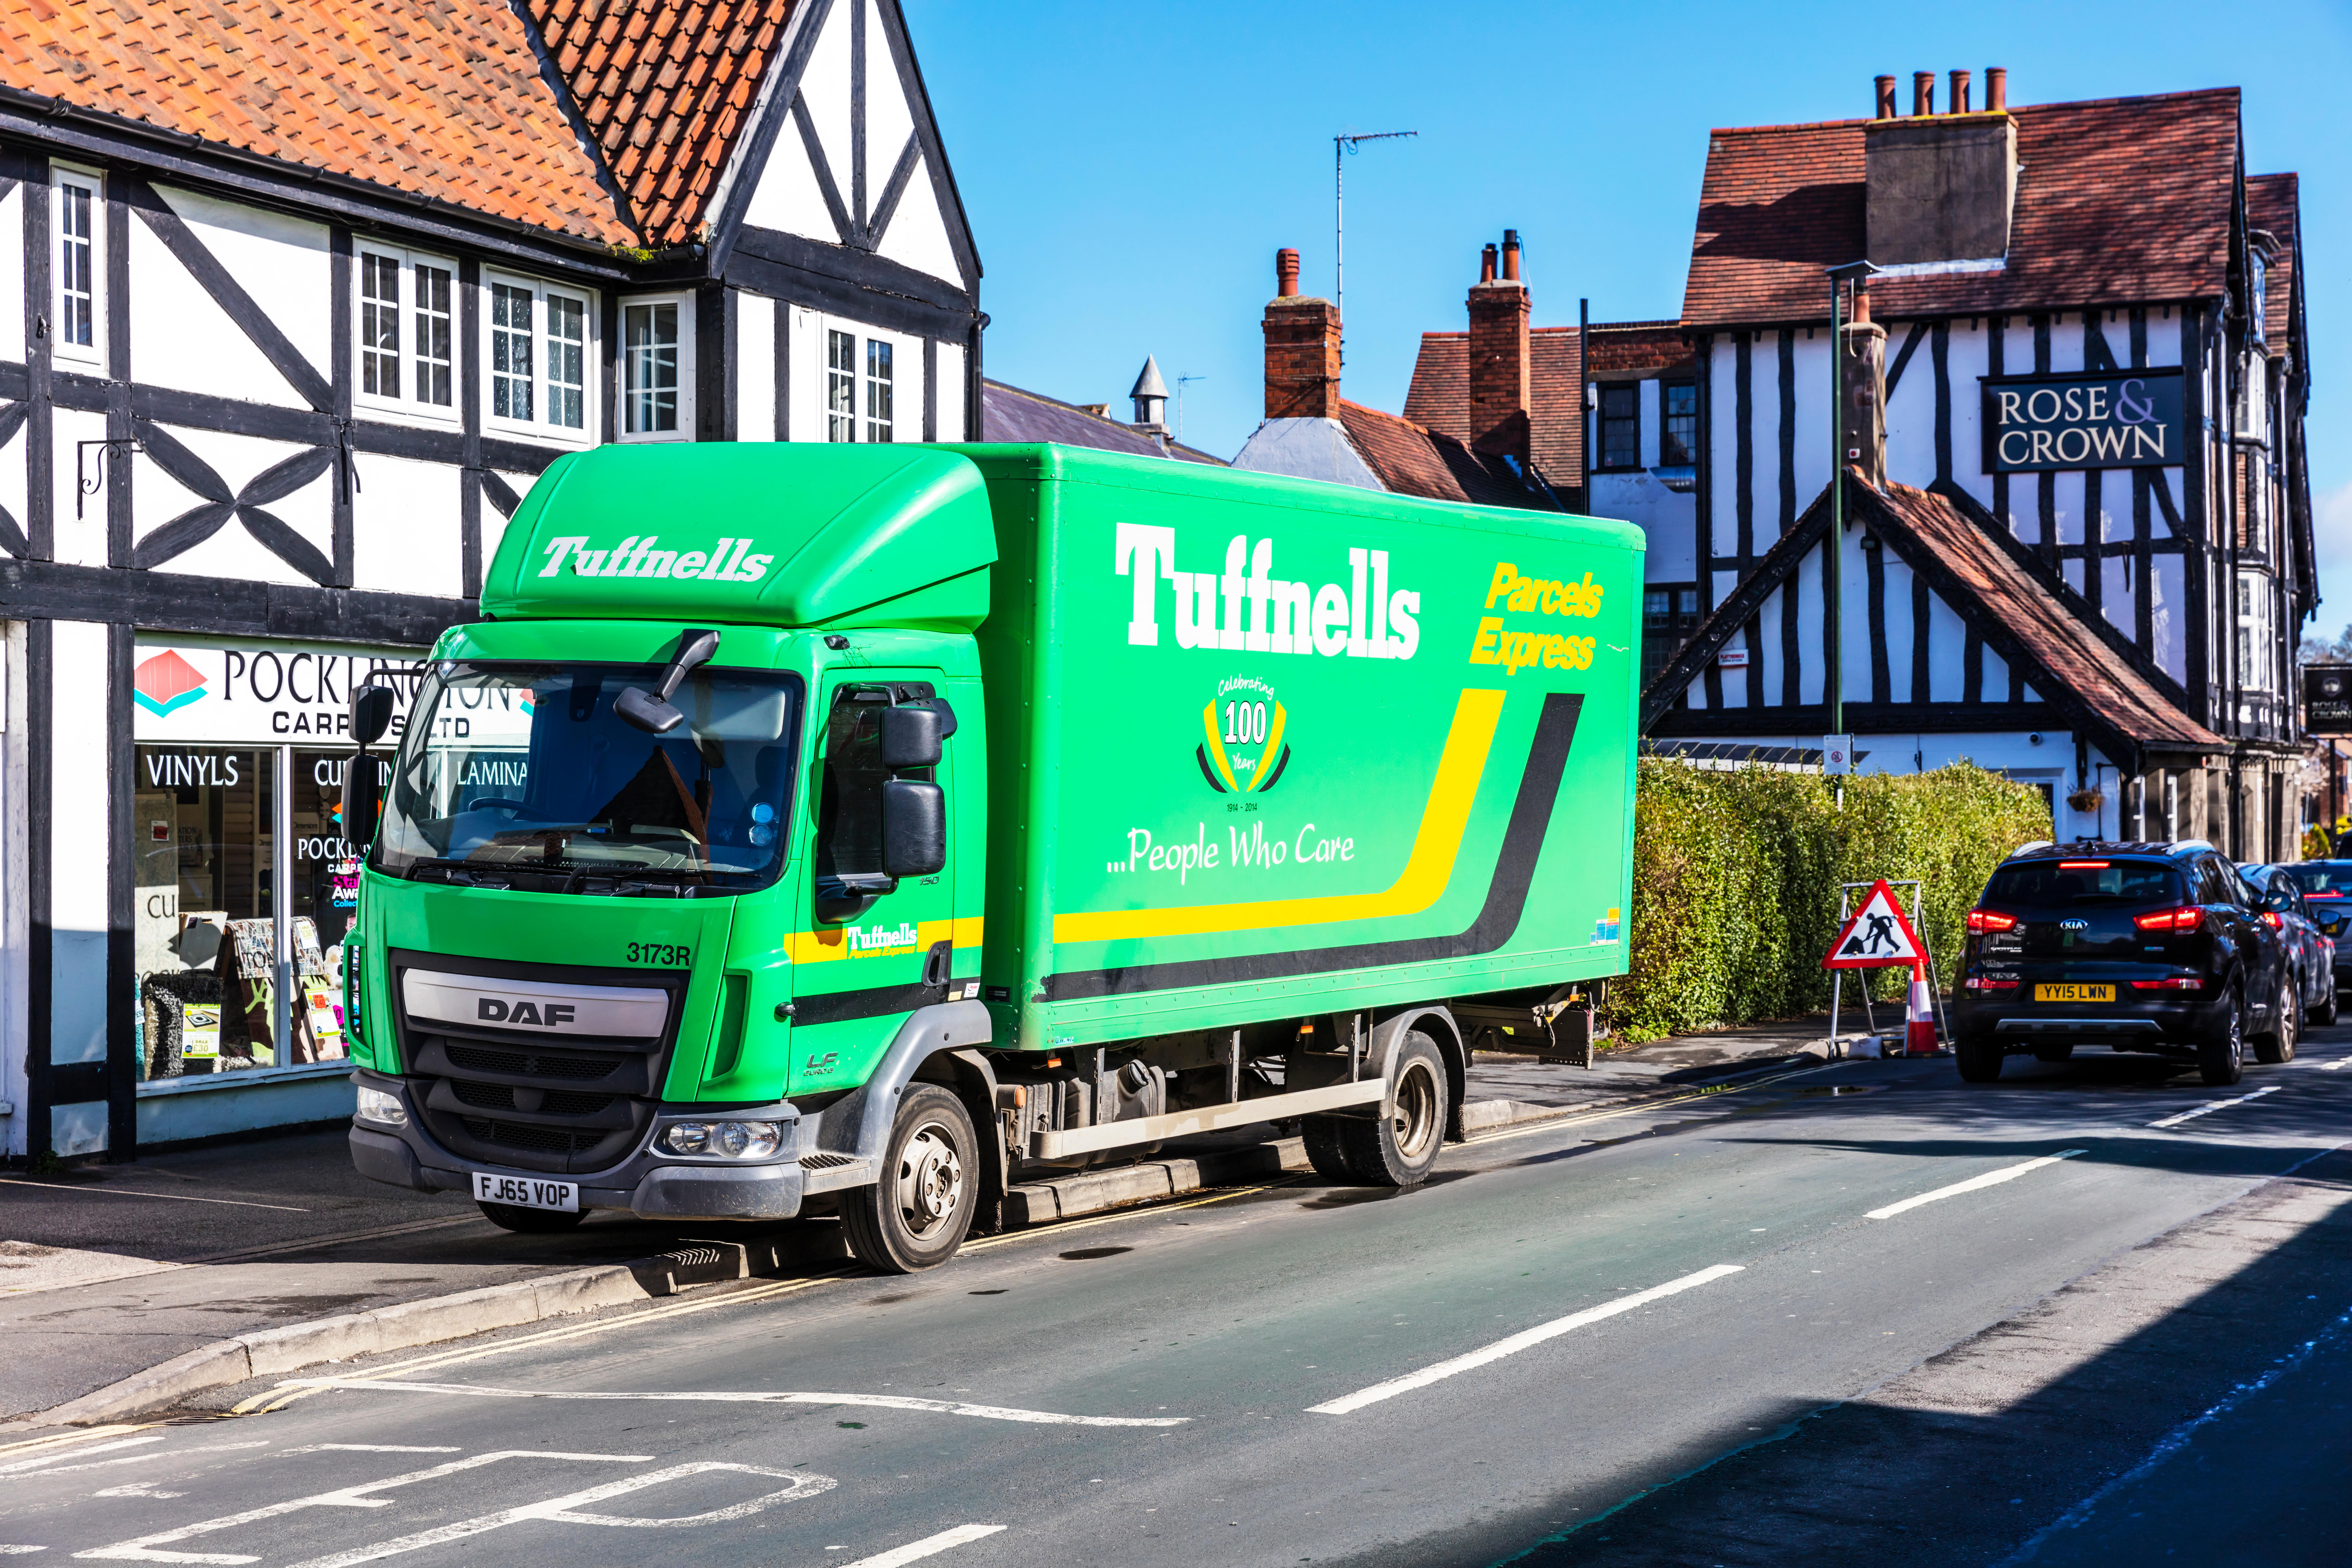 A Tuffnells parcel delivery van